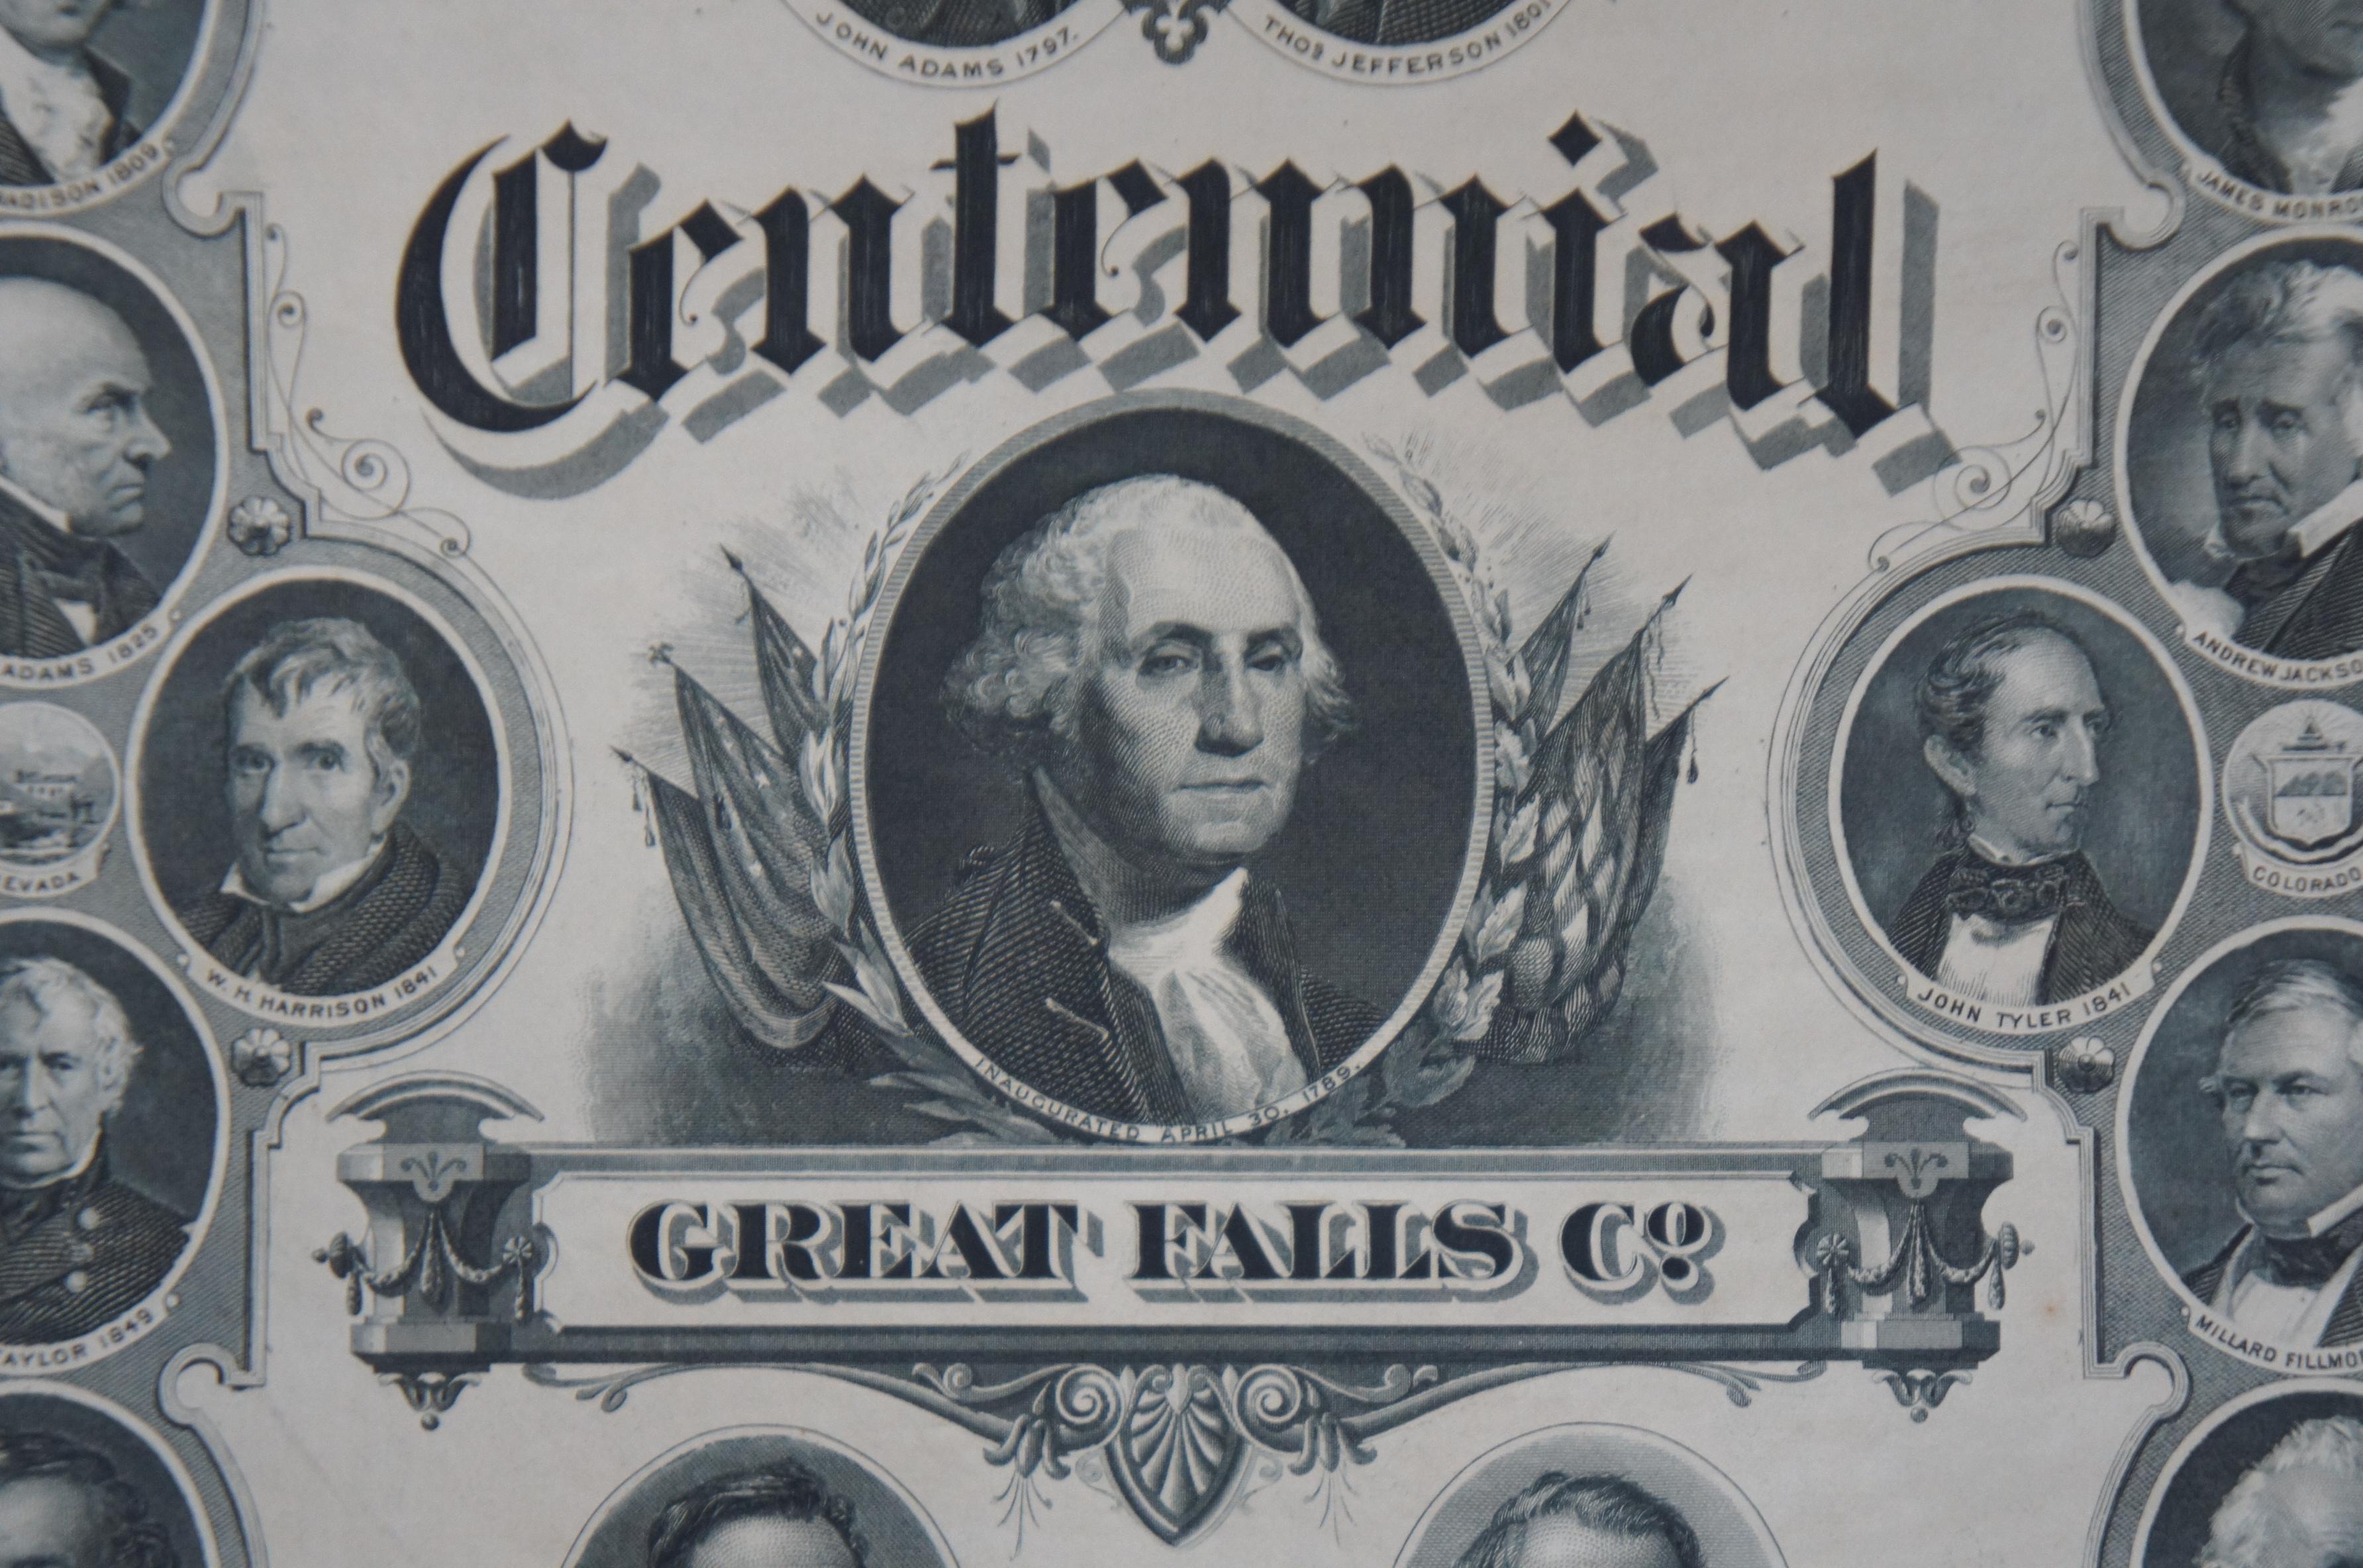 1876 Antique American Centennial Bank Note Engraving 18 Presidents 36 States 2